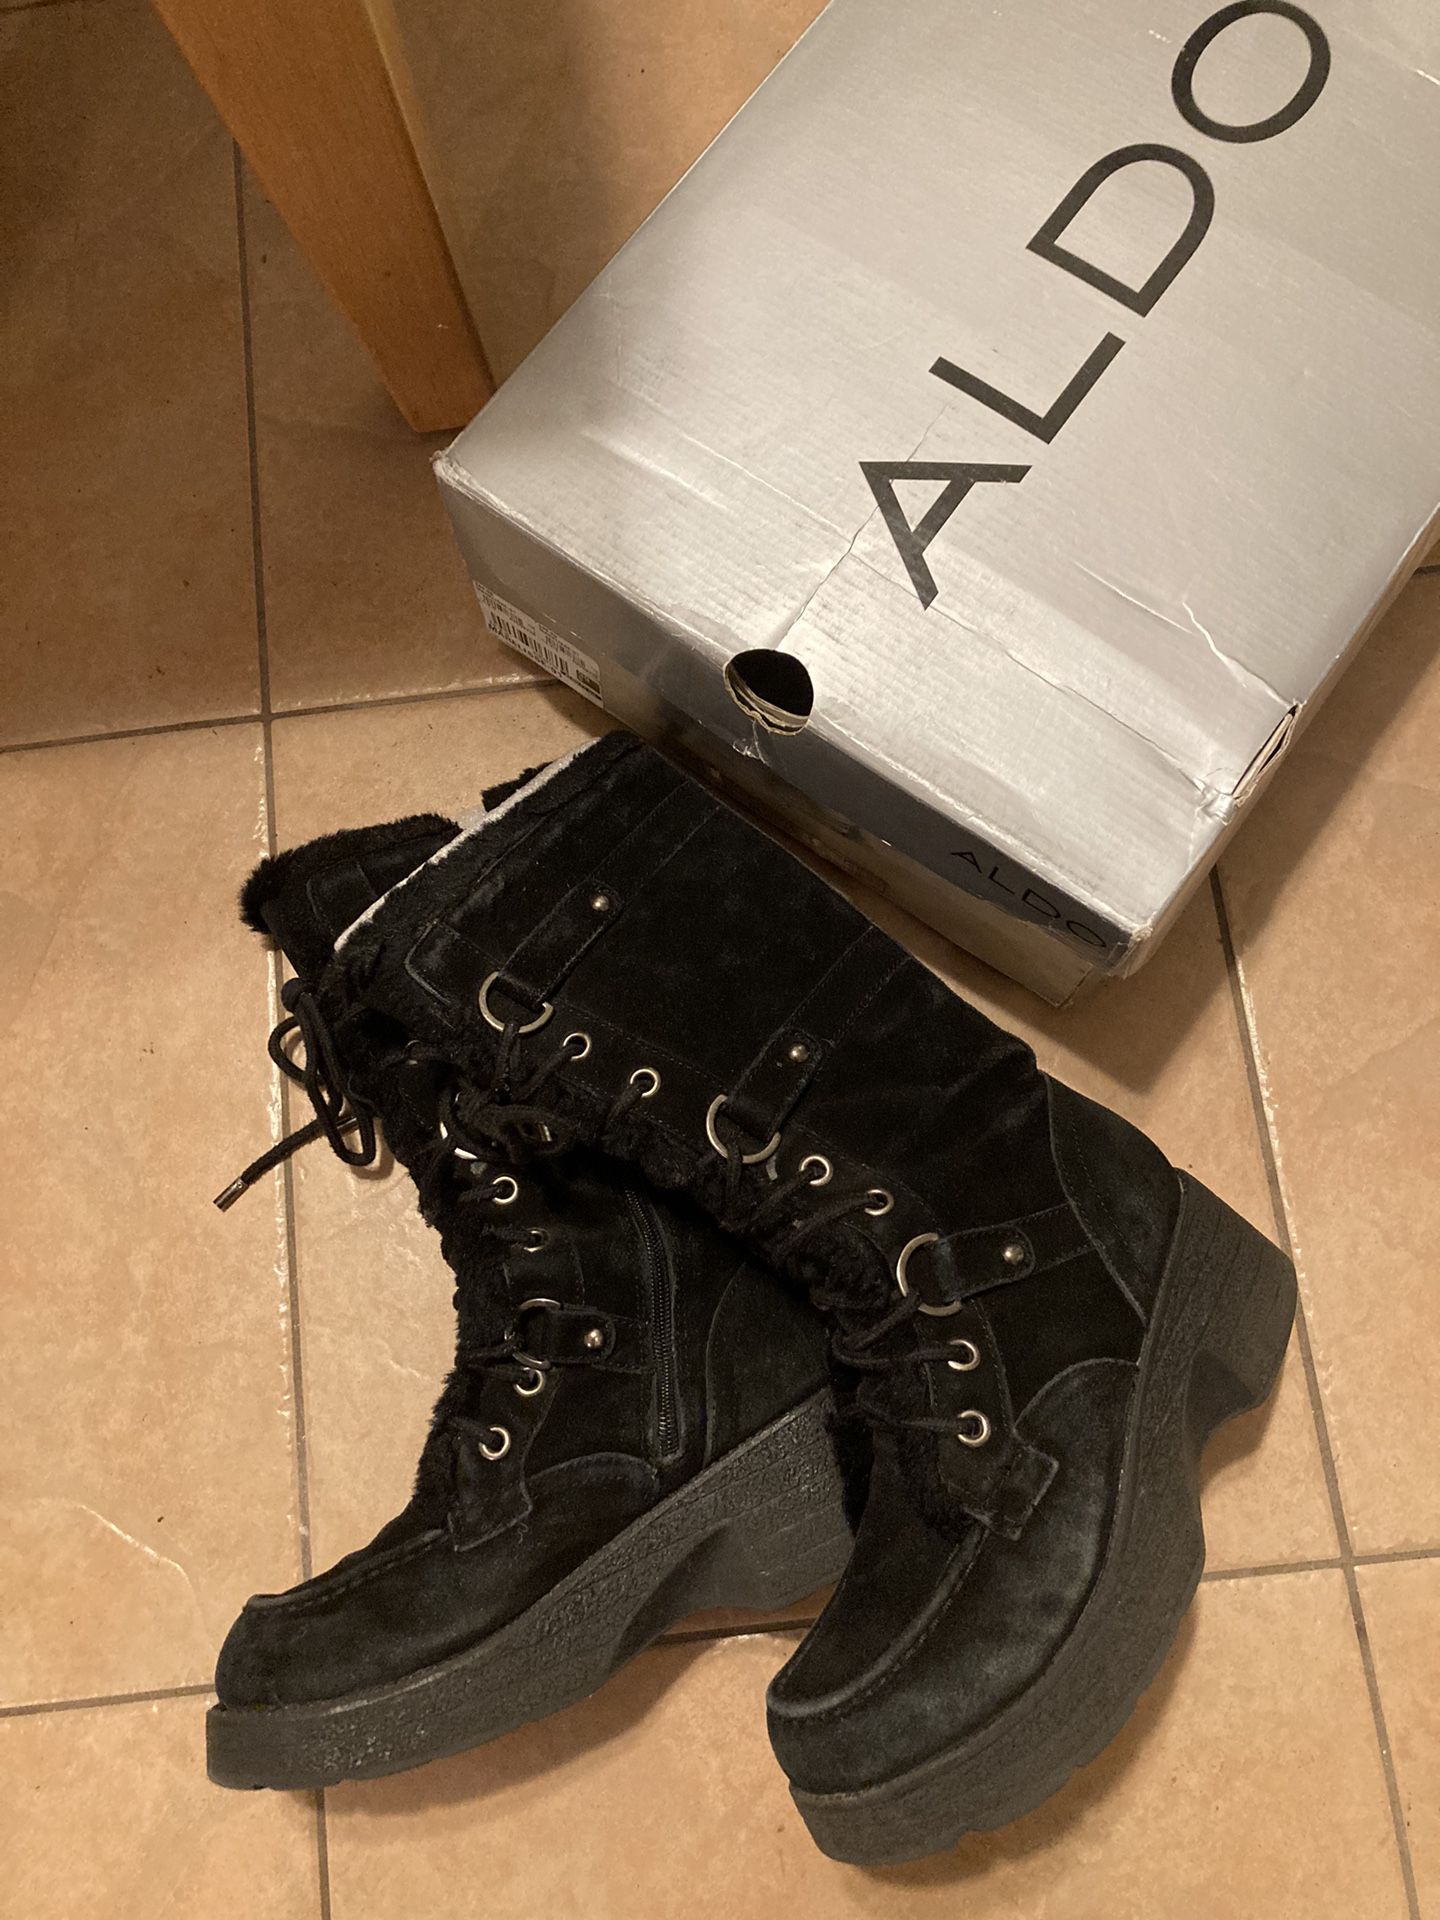 Aldo Women’s Black Boots- See Description 